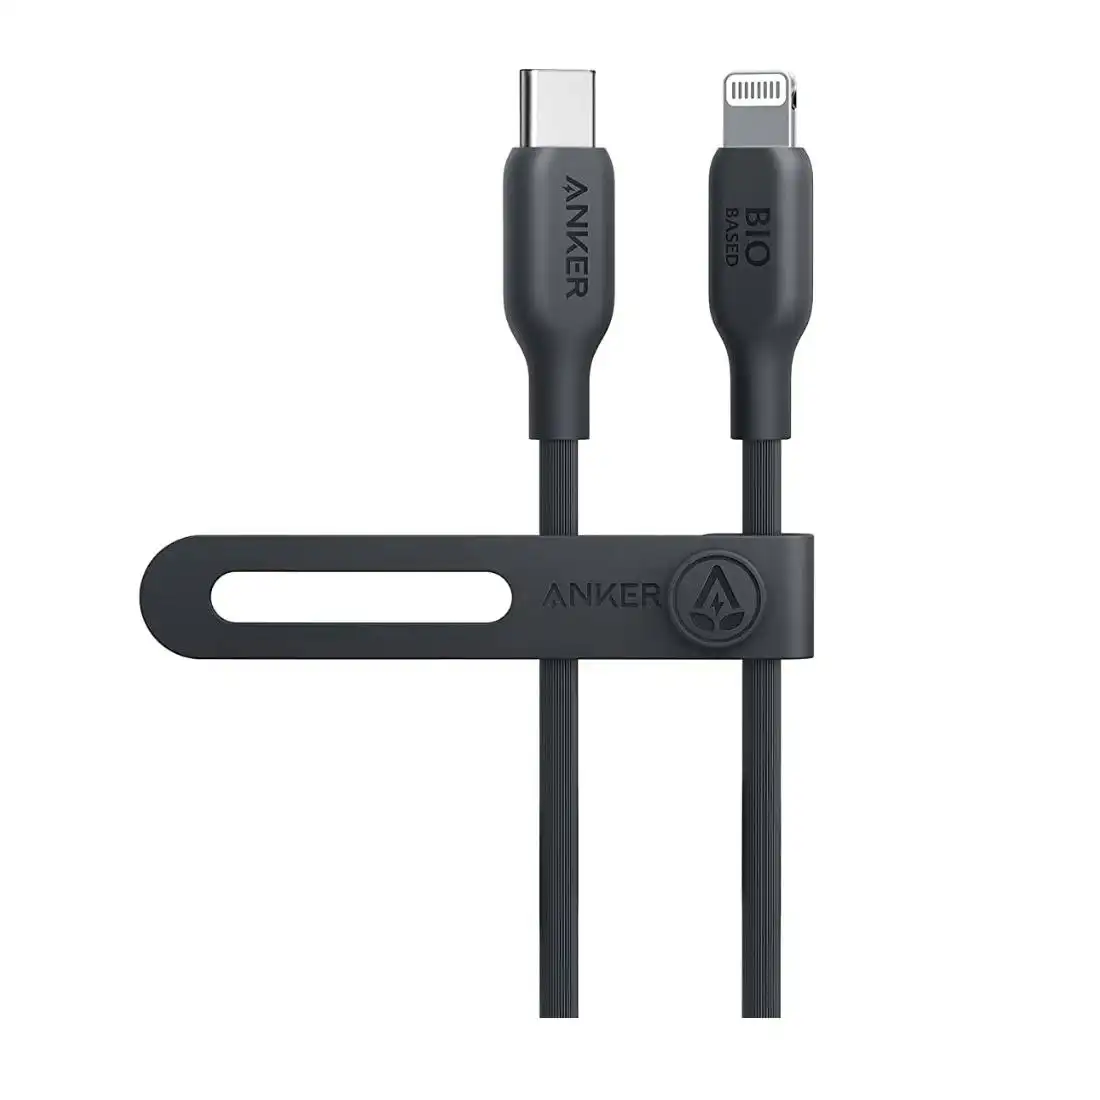 Anker 541 USB-C to Lightning Cable (Bio-Based 3ft) - Black